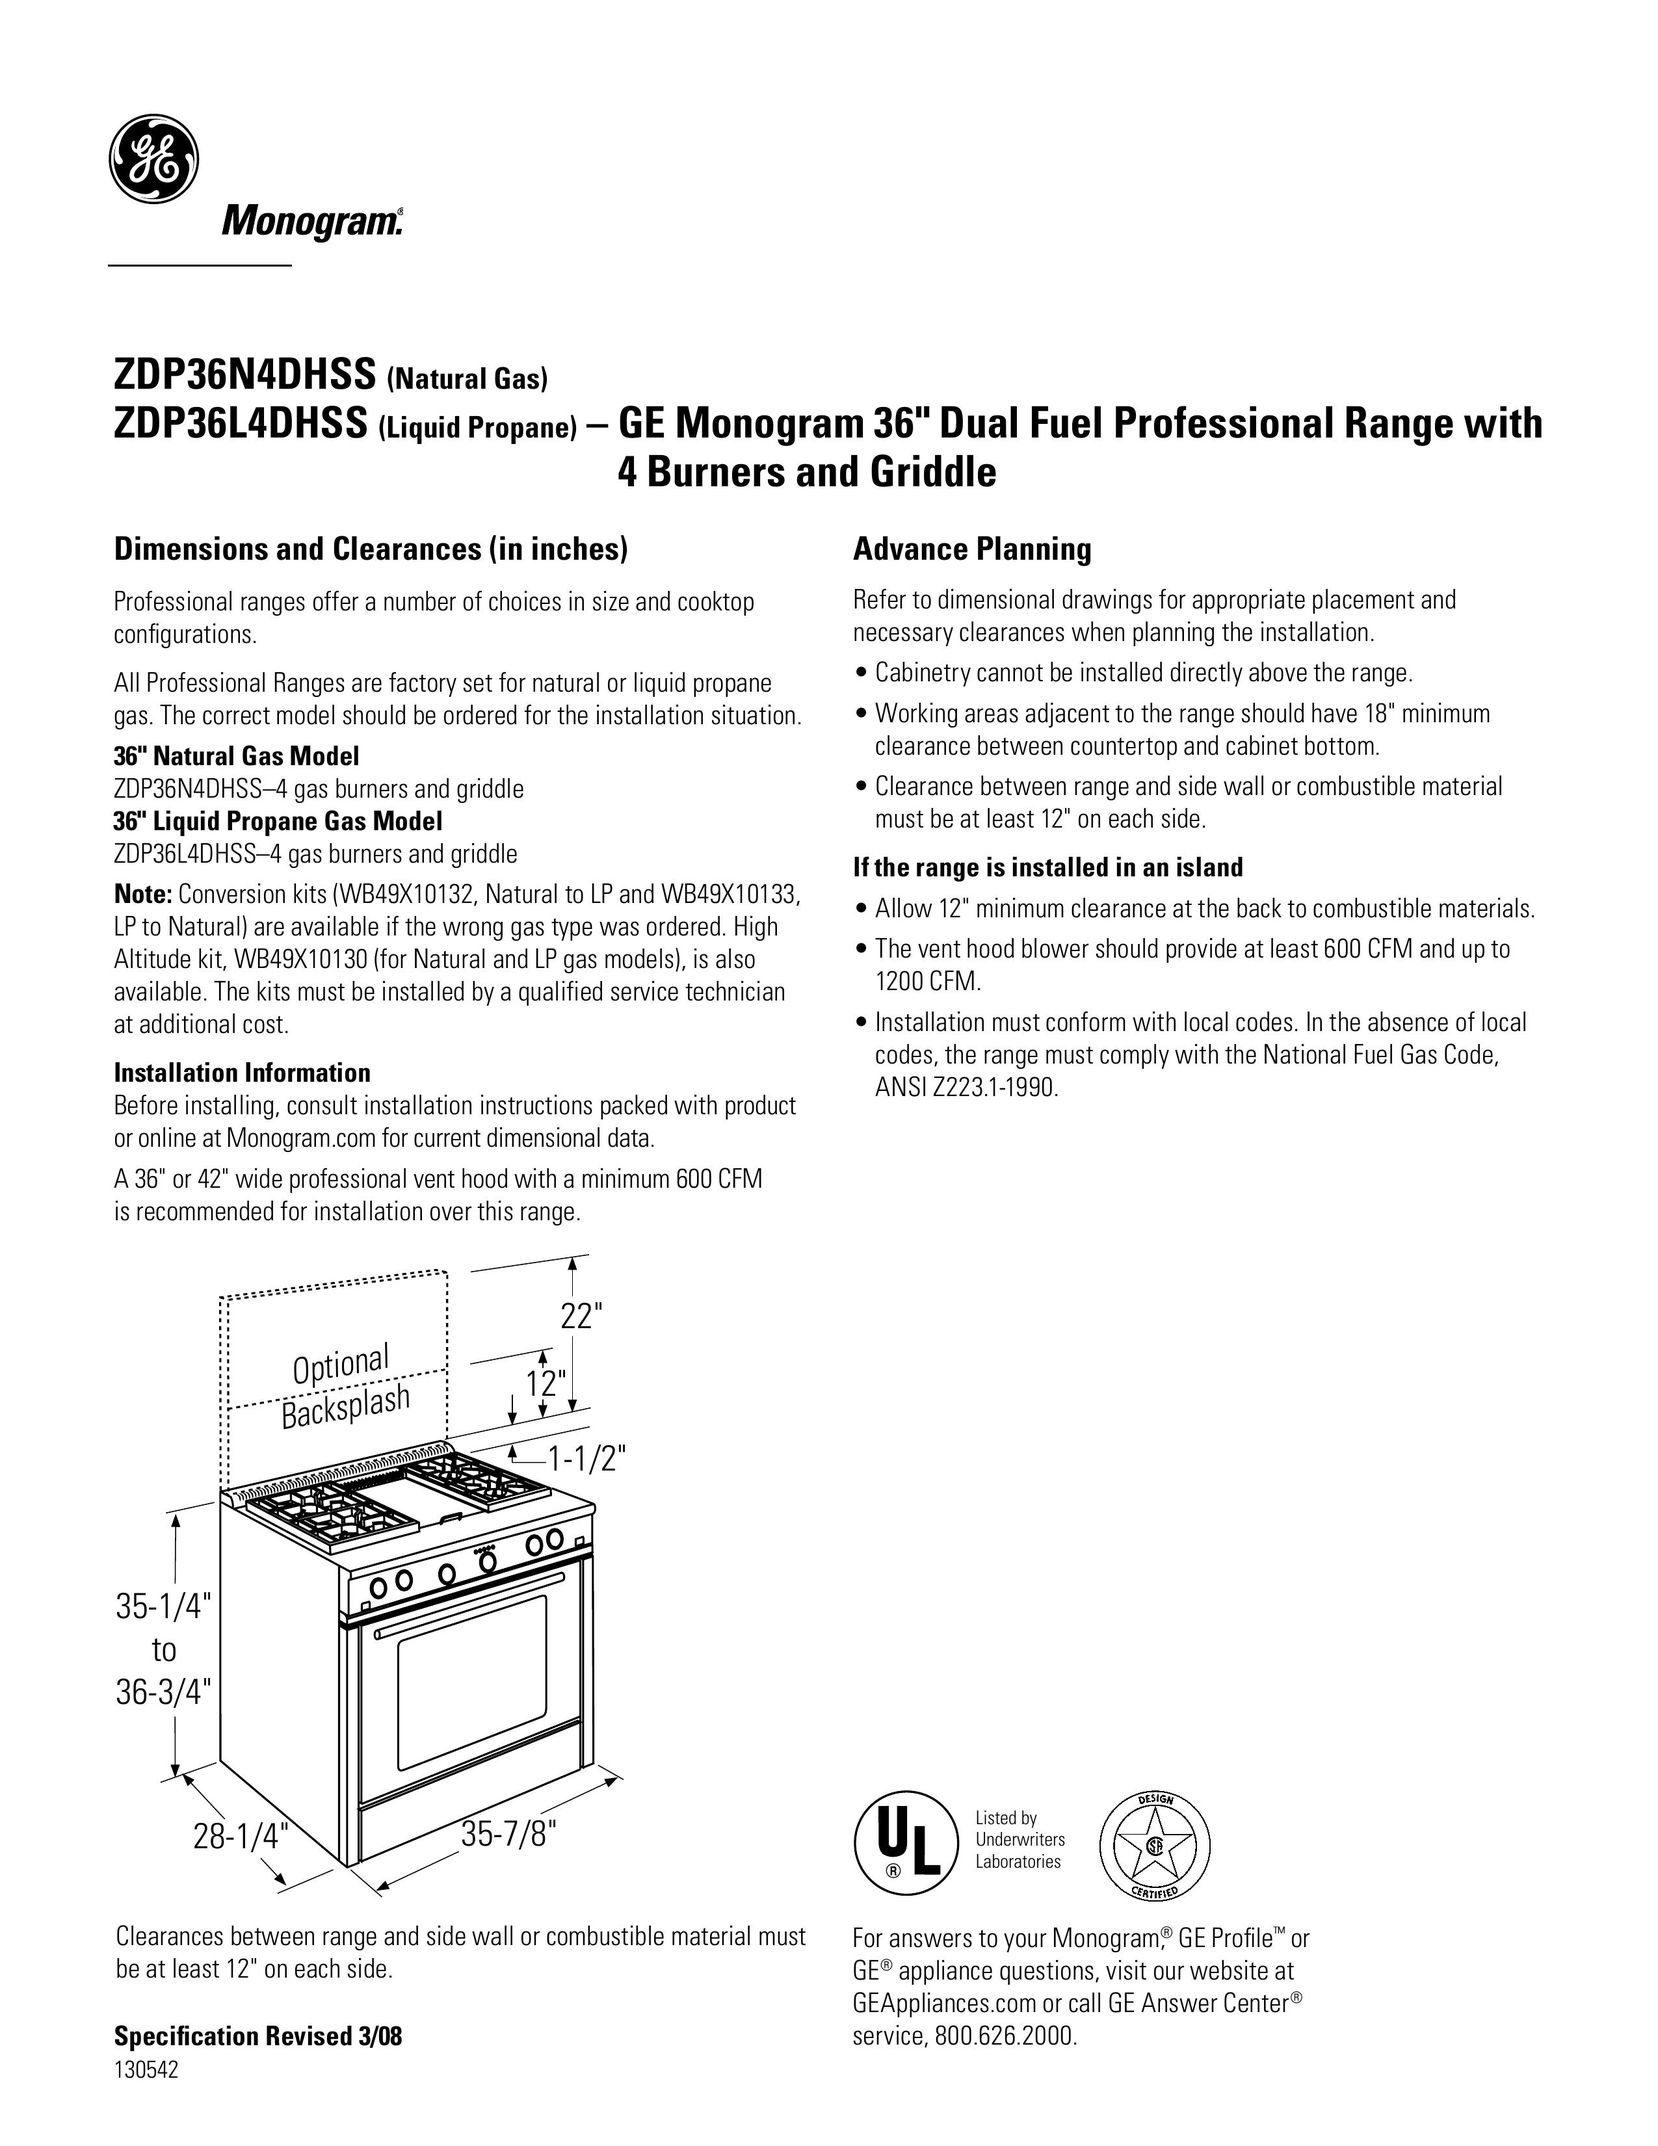 GE Monogram ZDP36N4DHSS Range User Manual